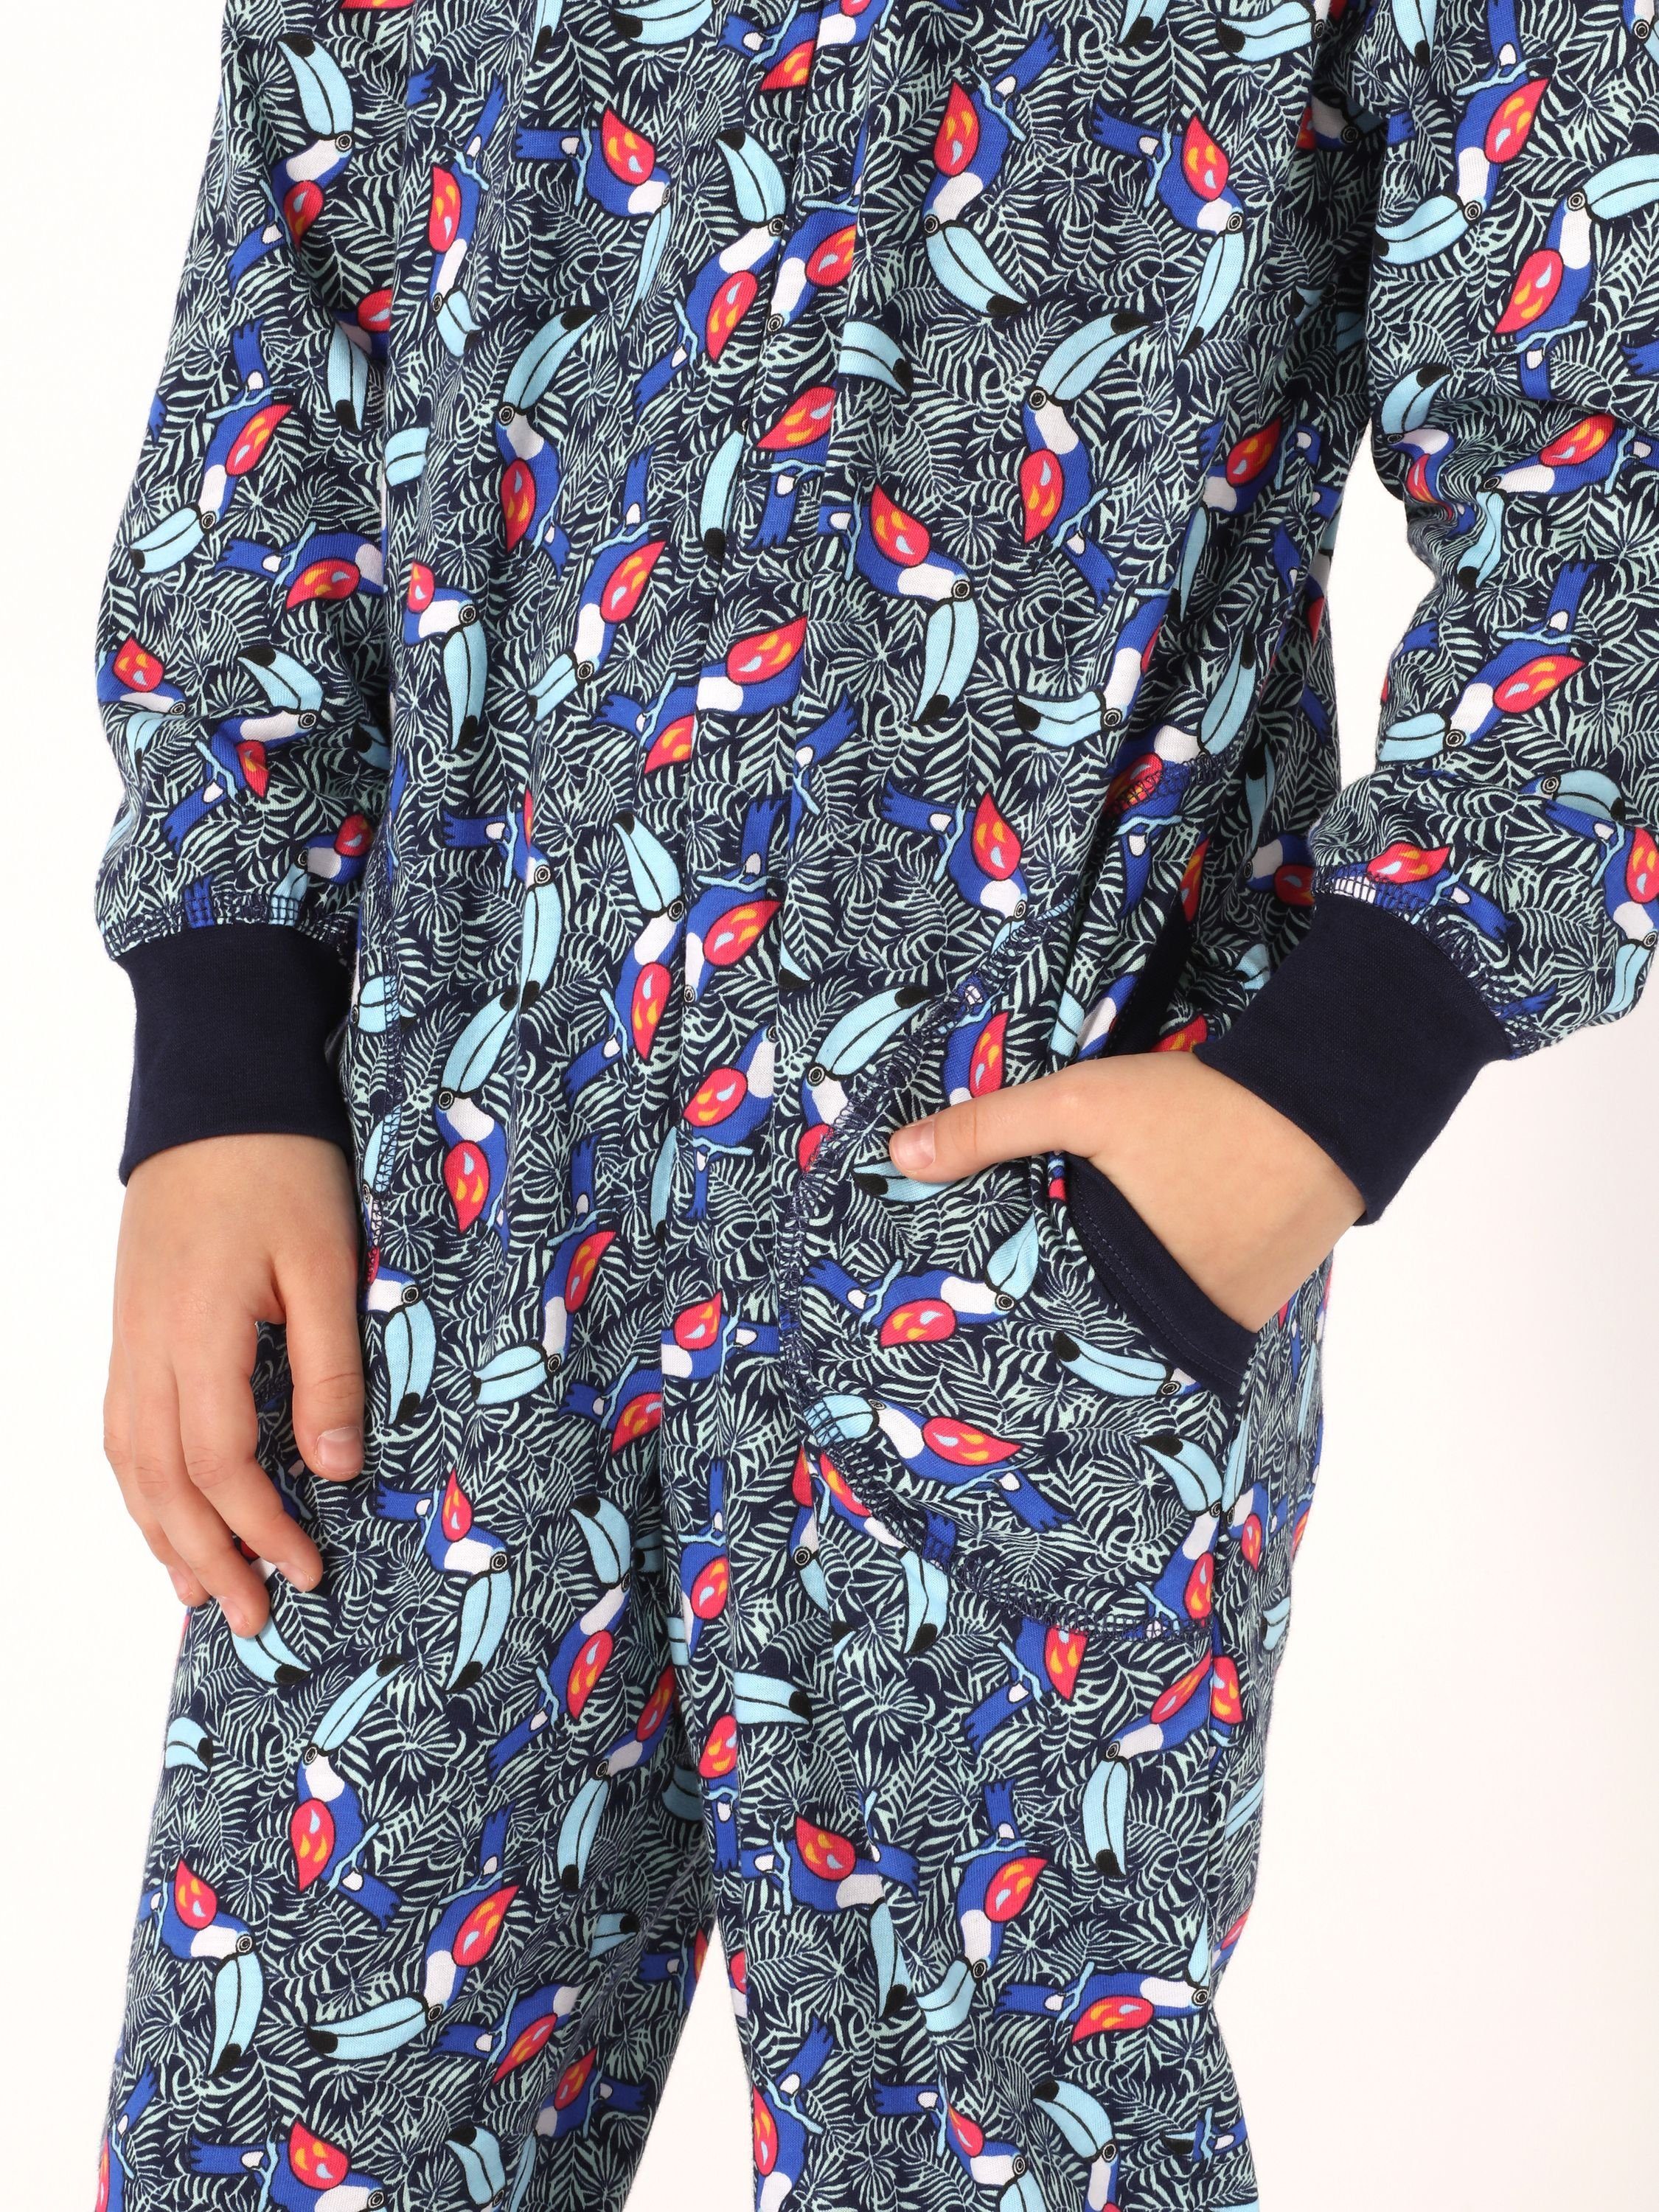 Style Marineblau Tukan Merry MS10-186 Jumpsuit Schlafanzug Schlafanzug Mädchen